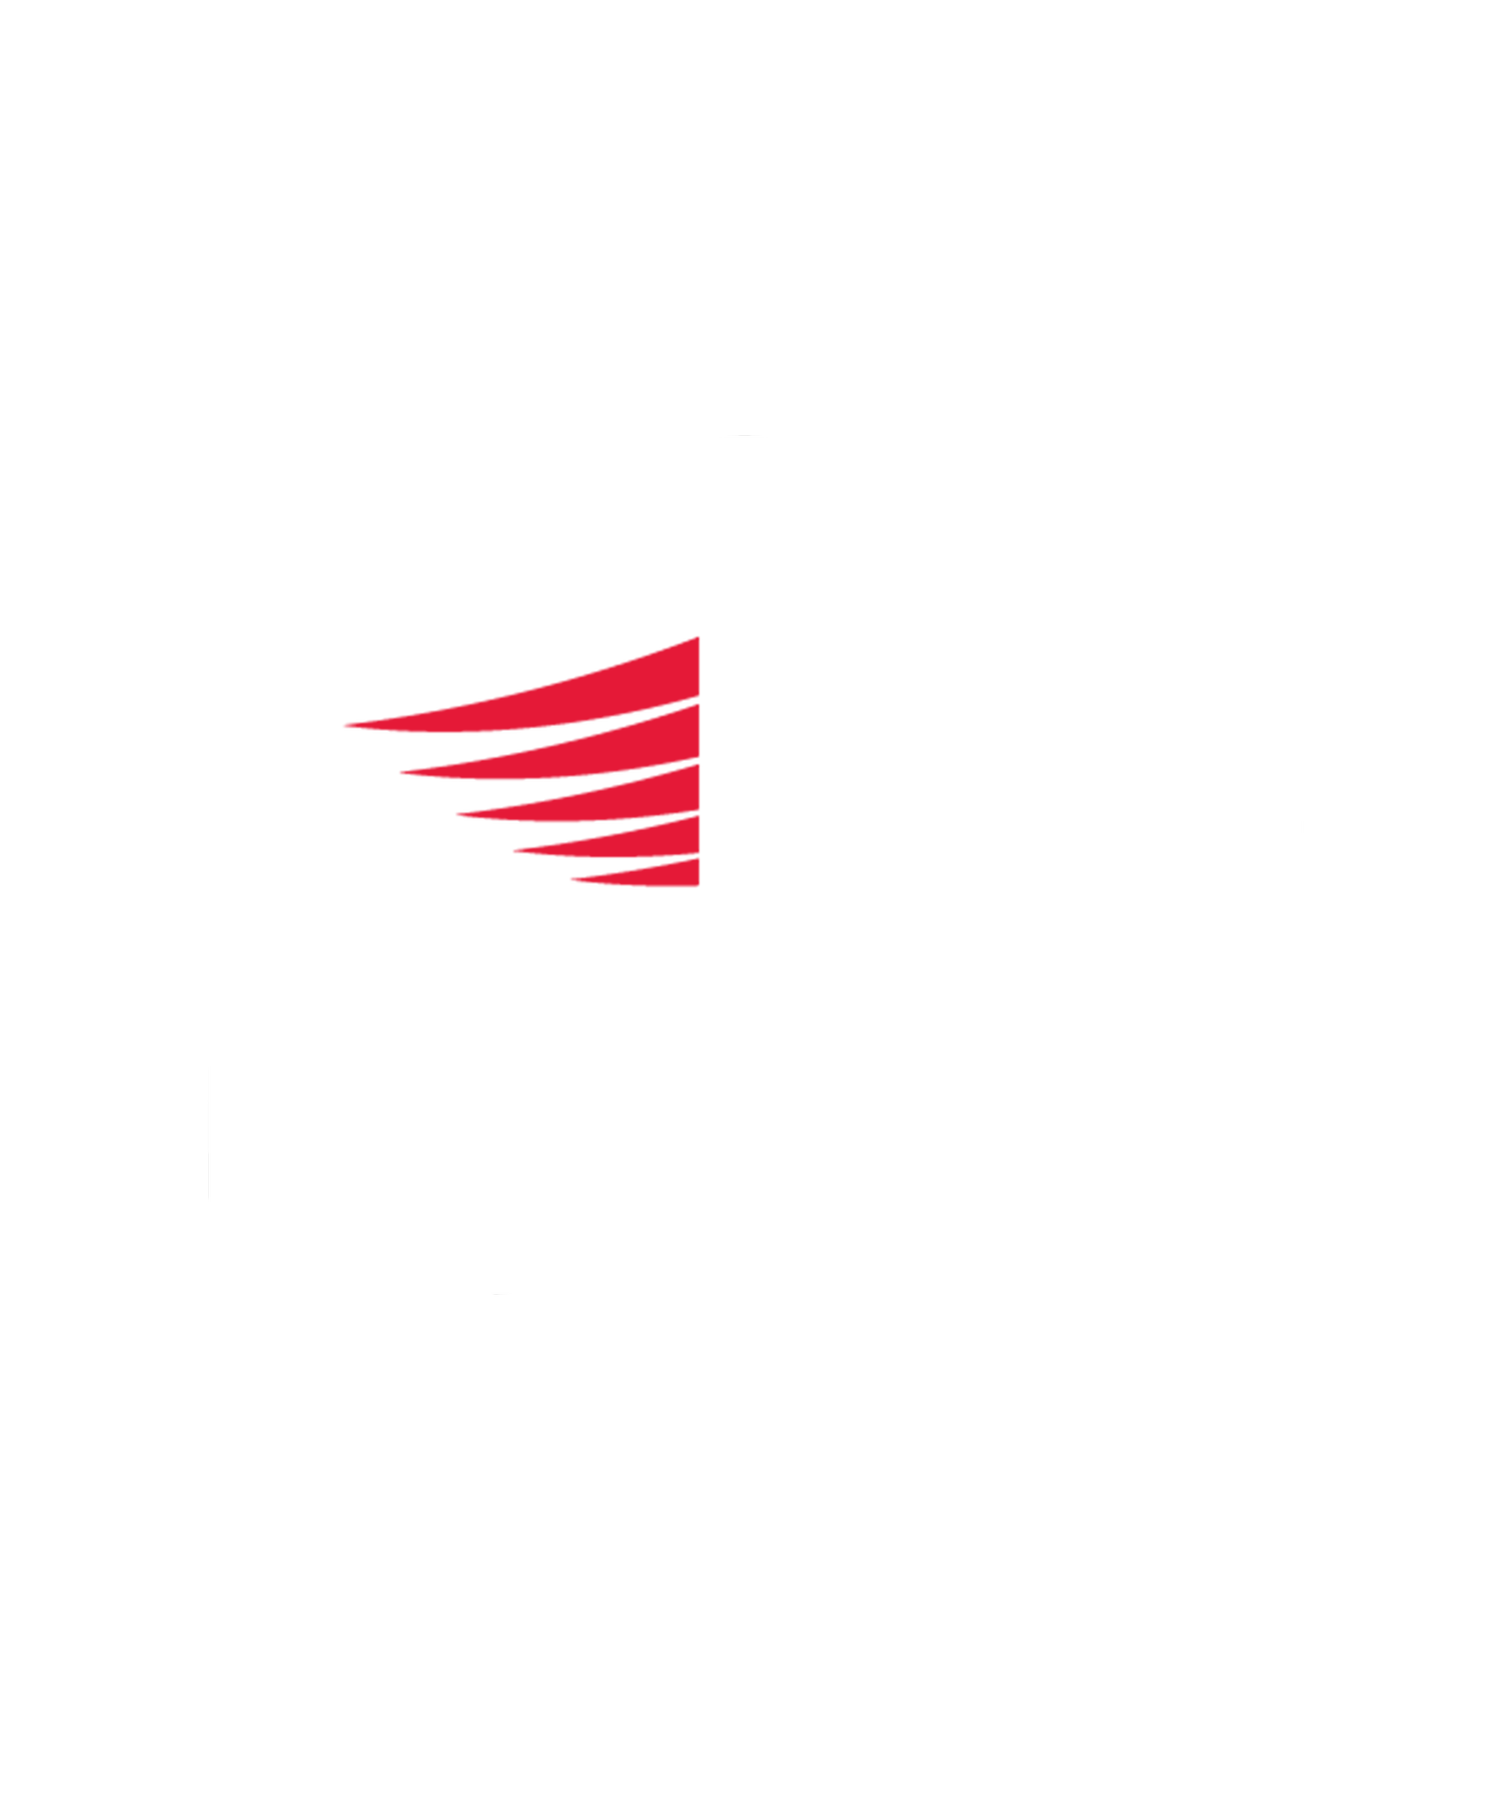 Buffalo Marathon